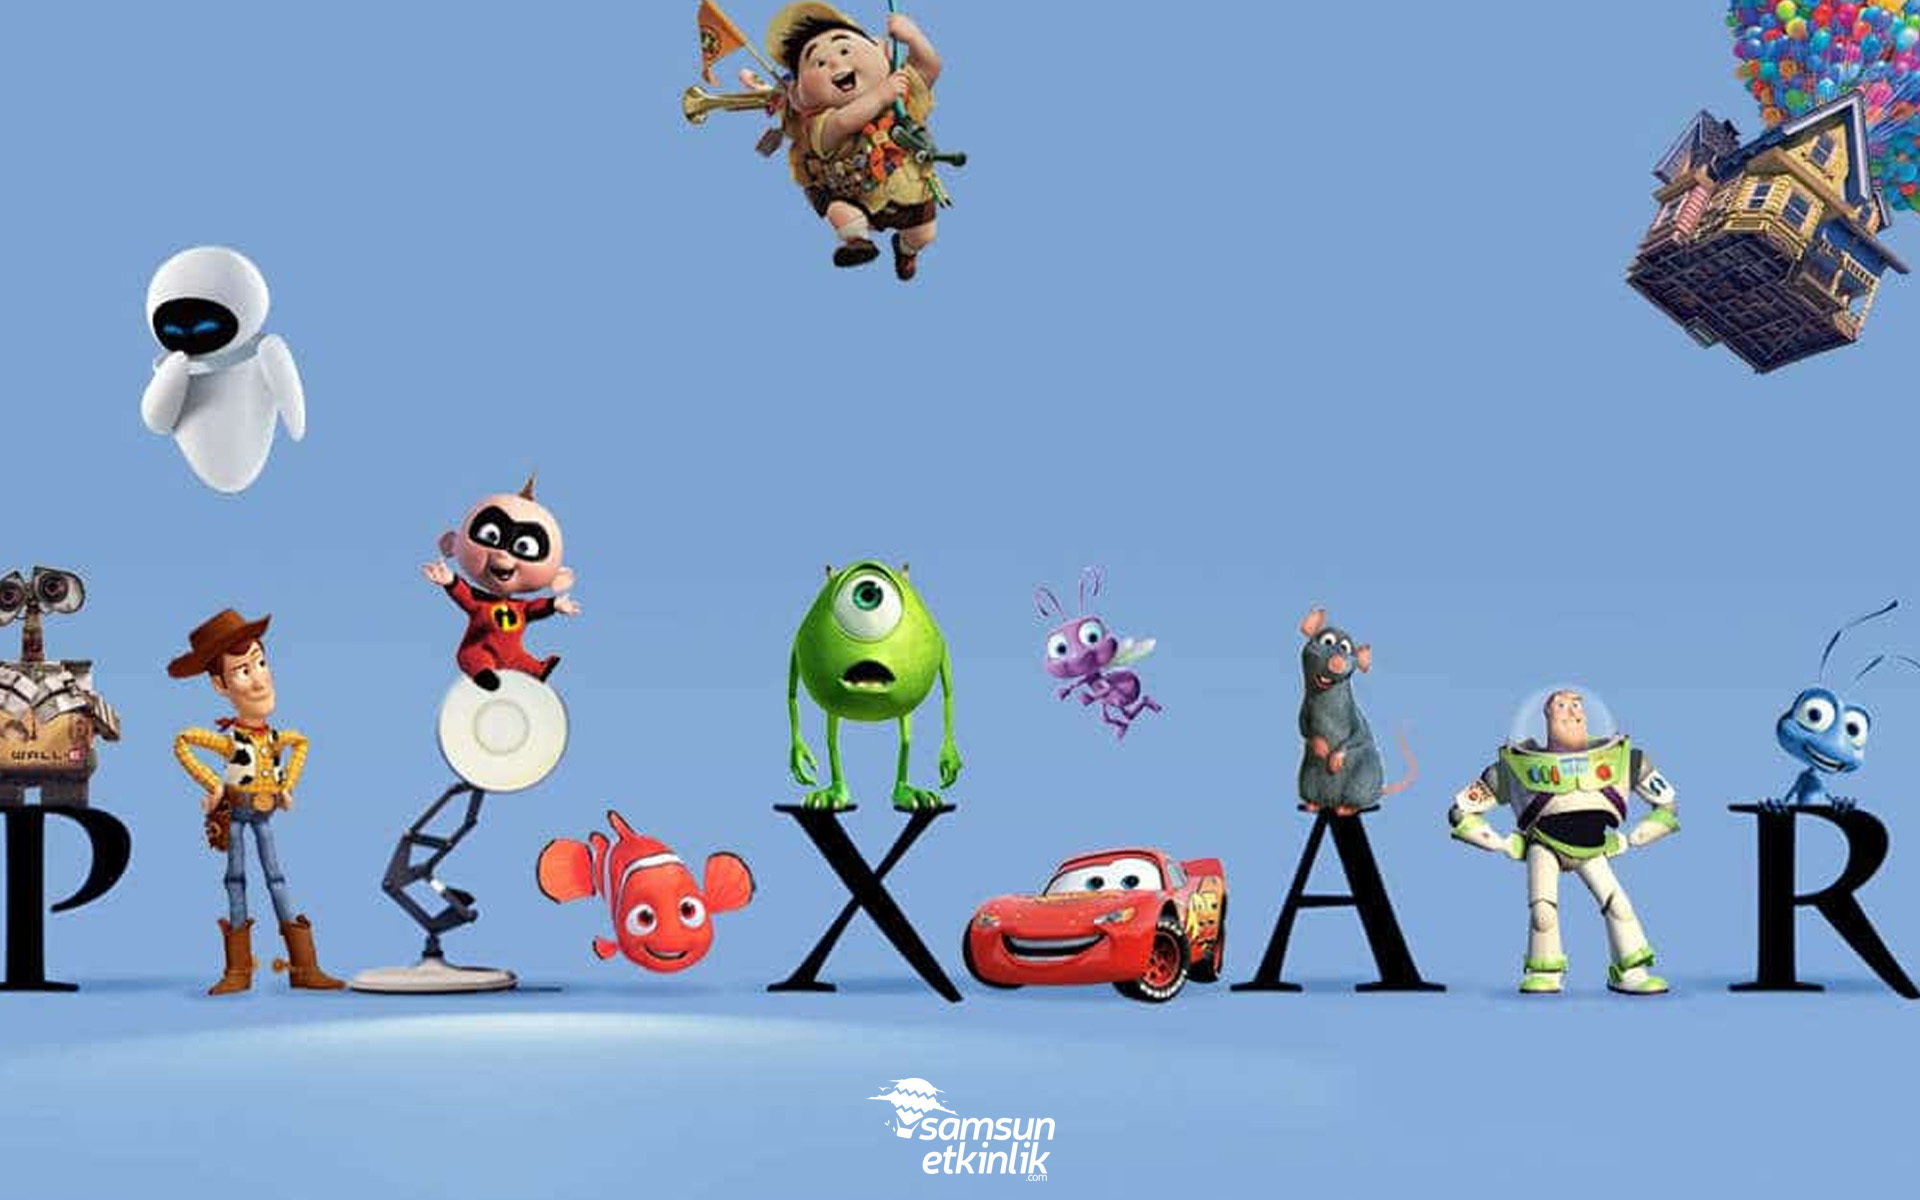 Luxo Jr Pixar